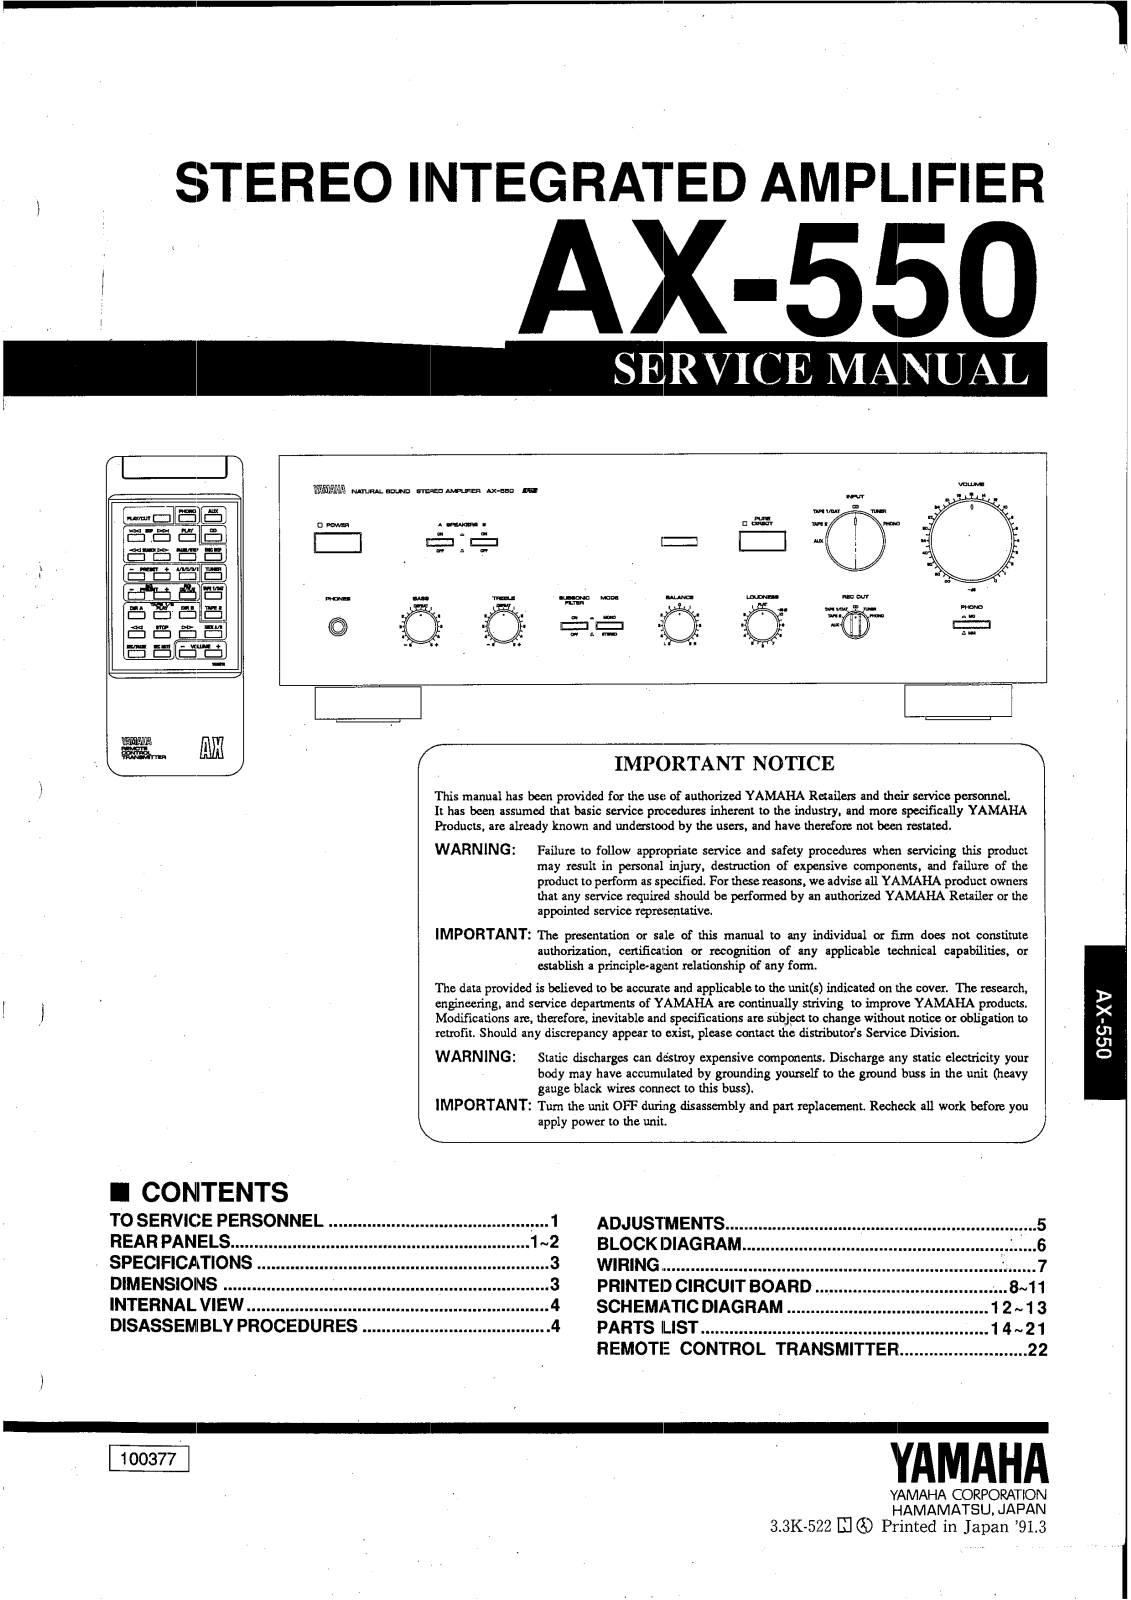 Yamaha AX-550 Service manual